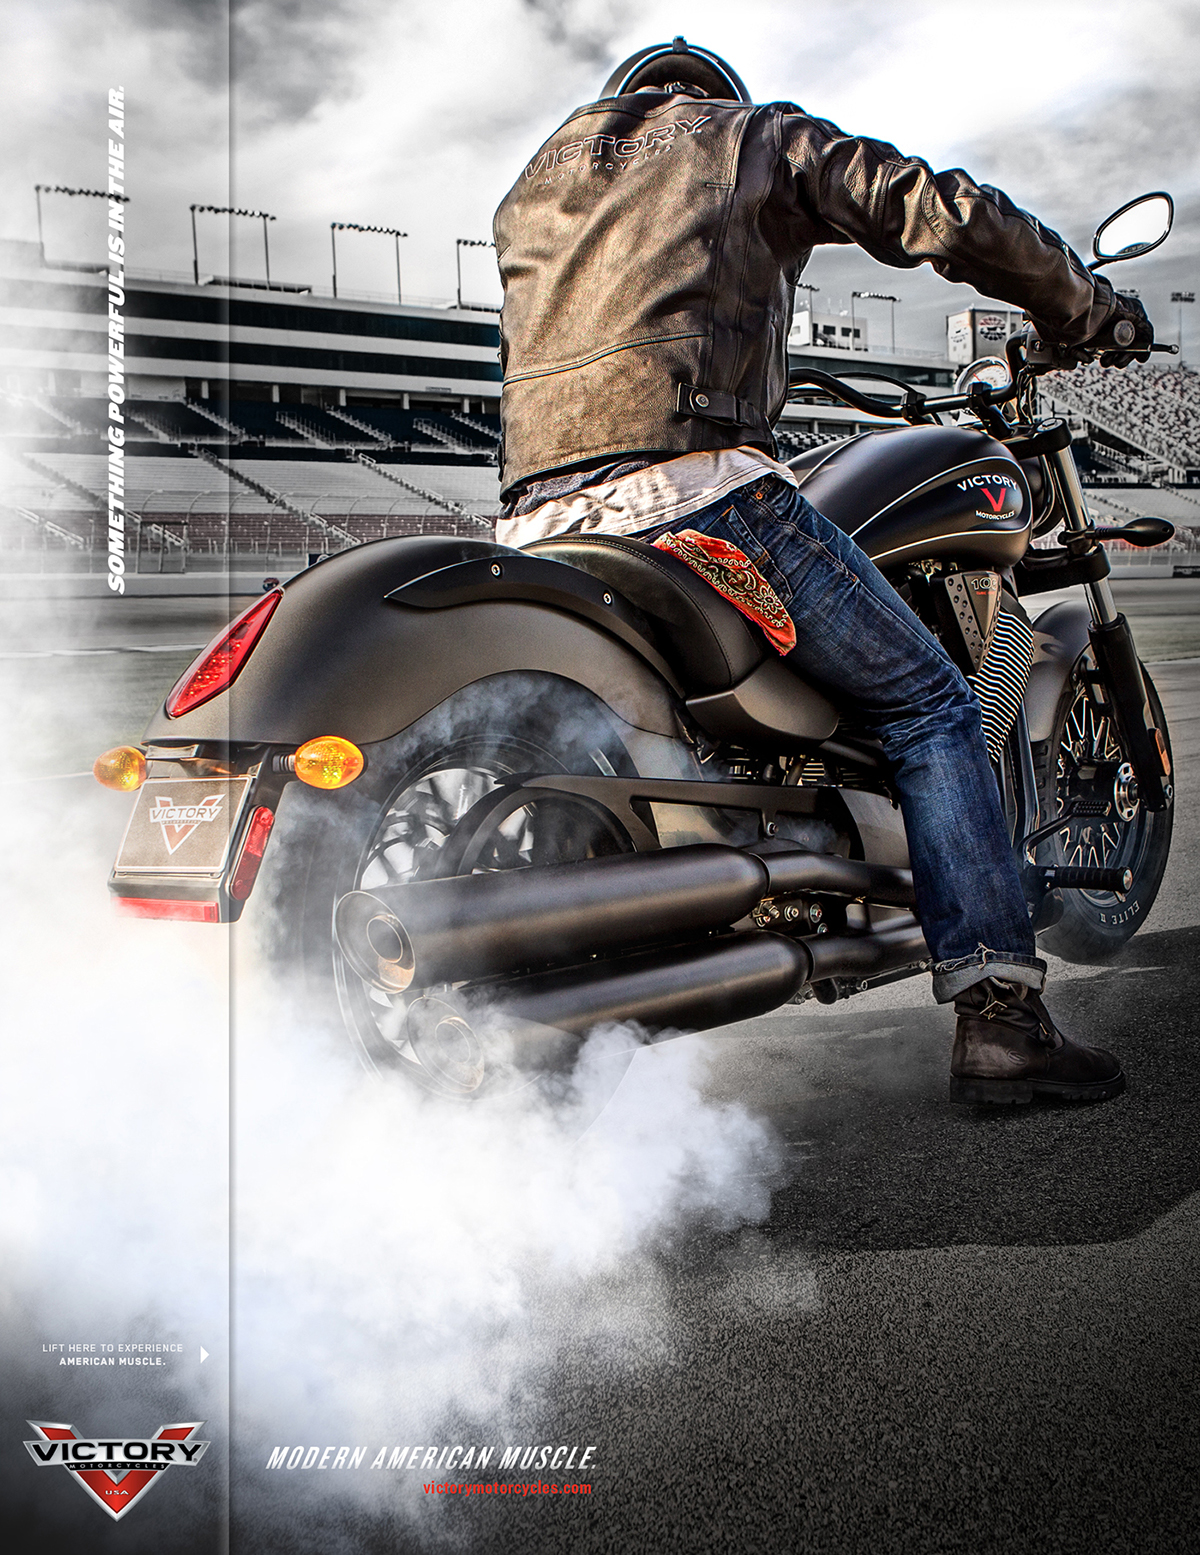 Adobe Portfolio Victory motorcycles